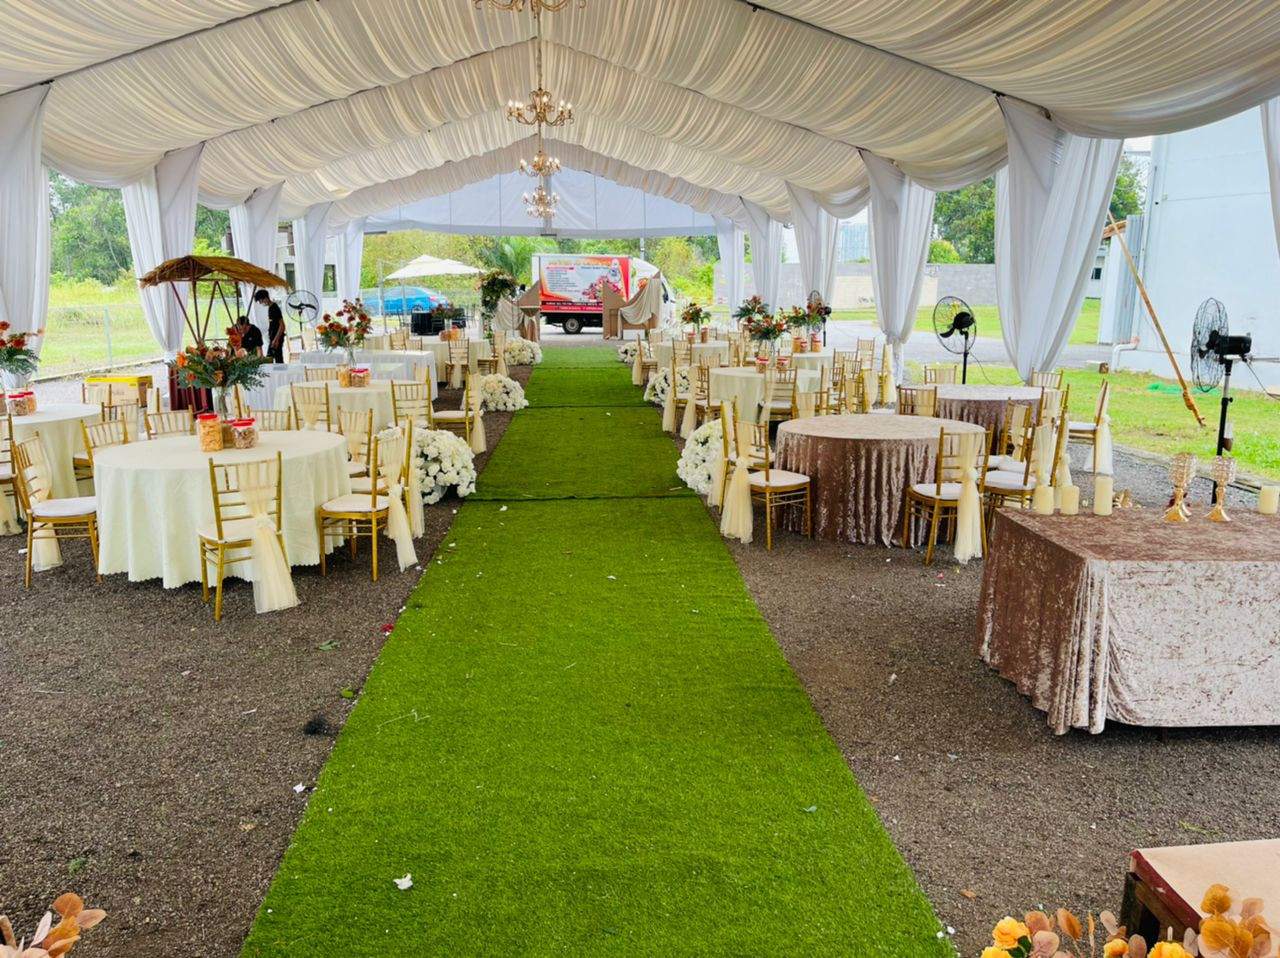 Lodge House - Garden Concept wedding only